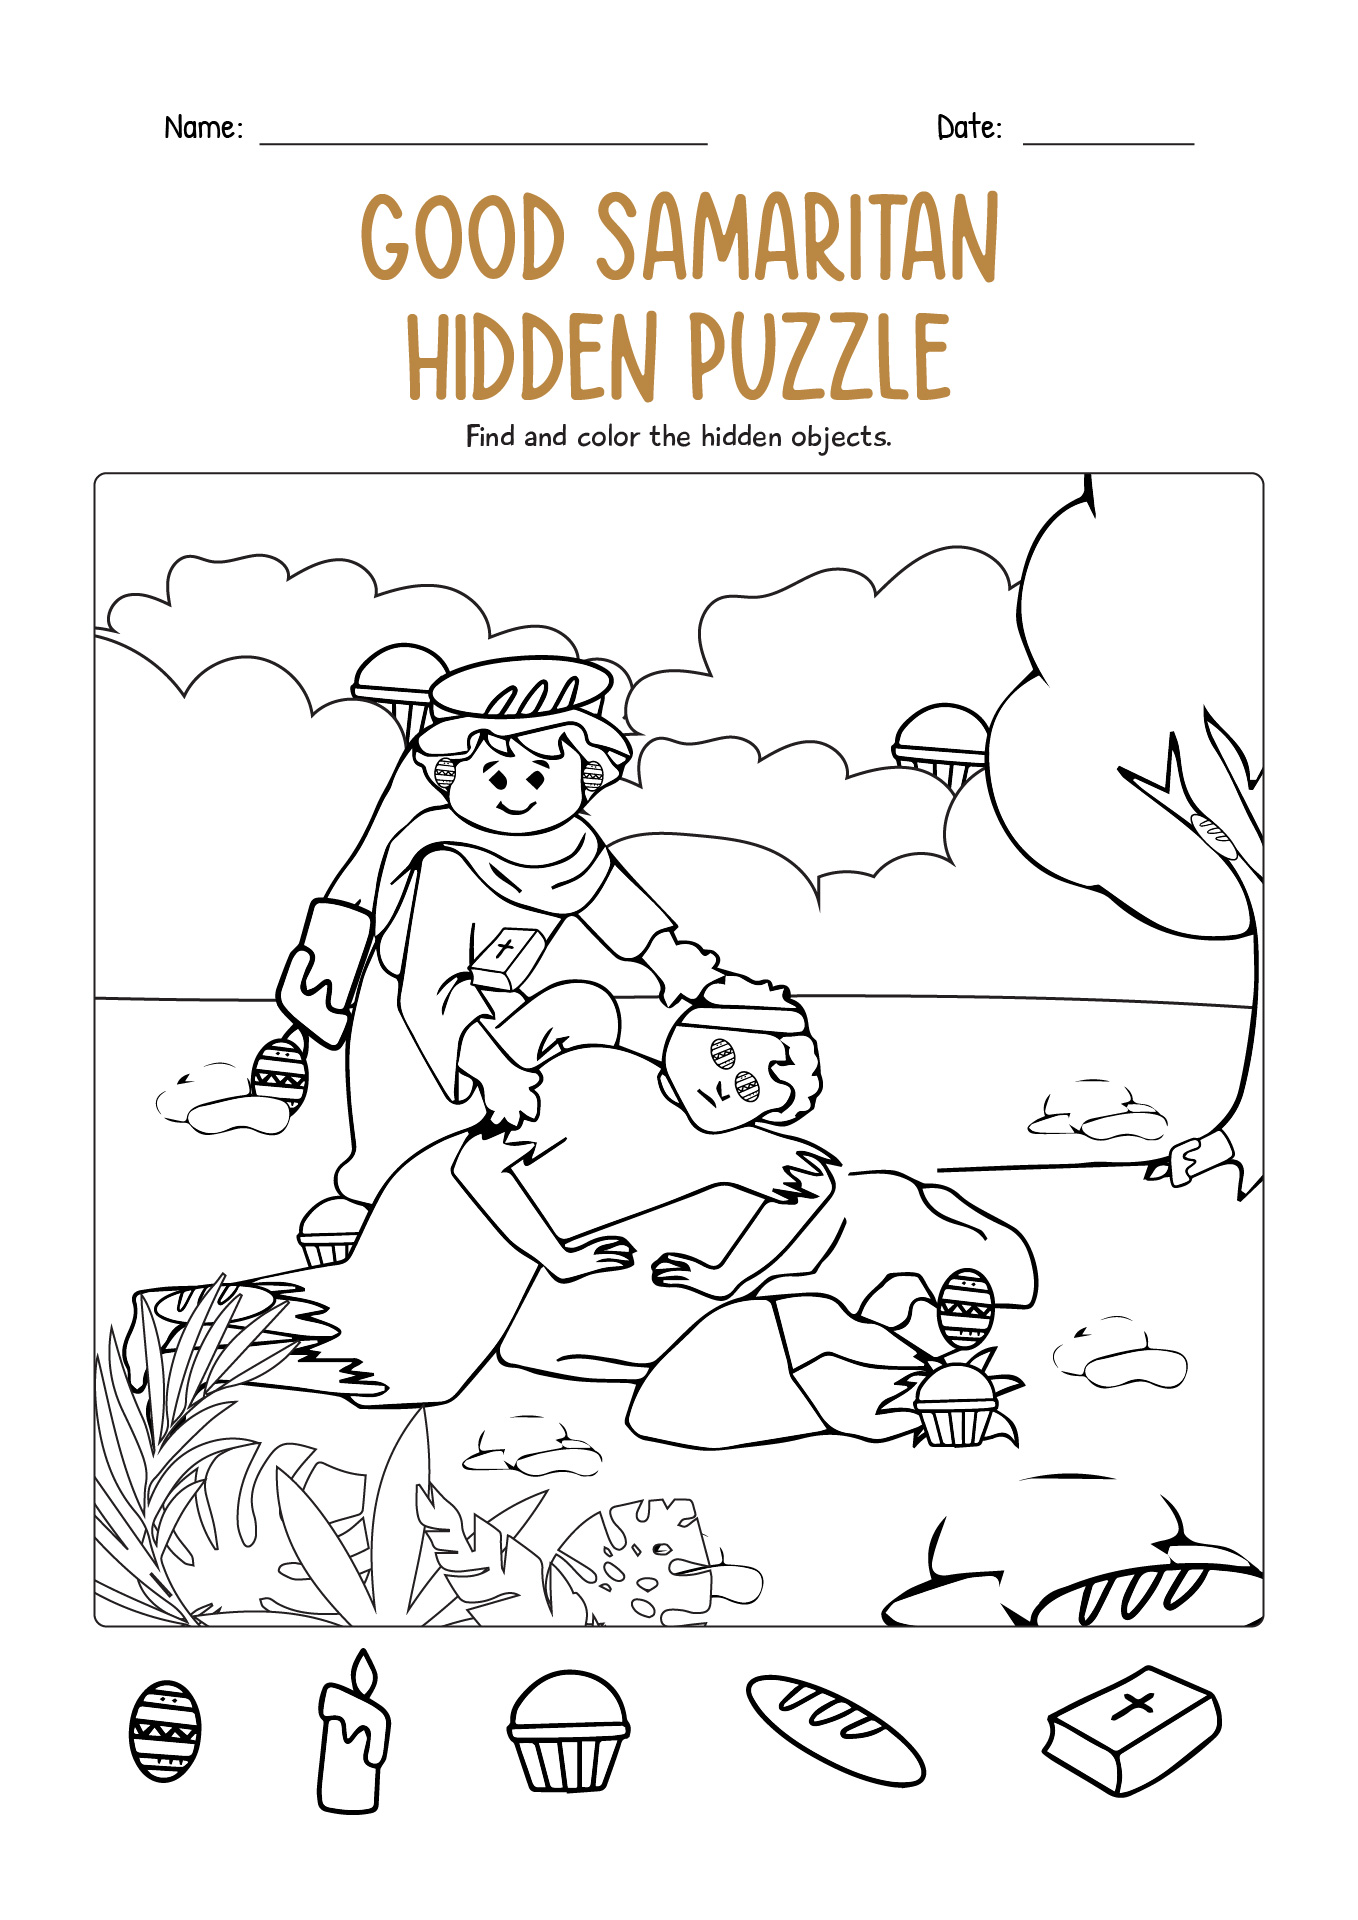 Good Samaritan Hidden Puzzle